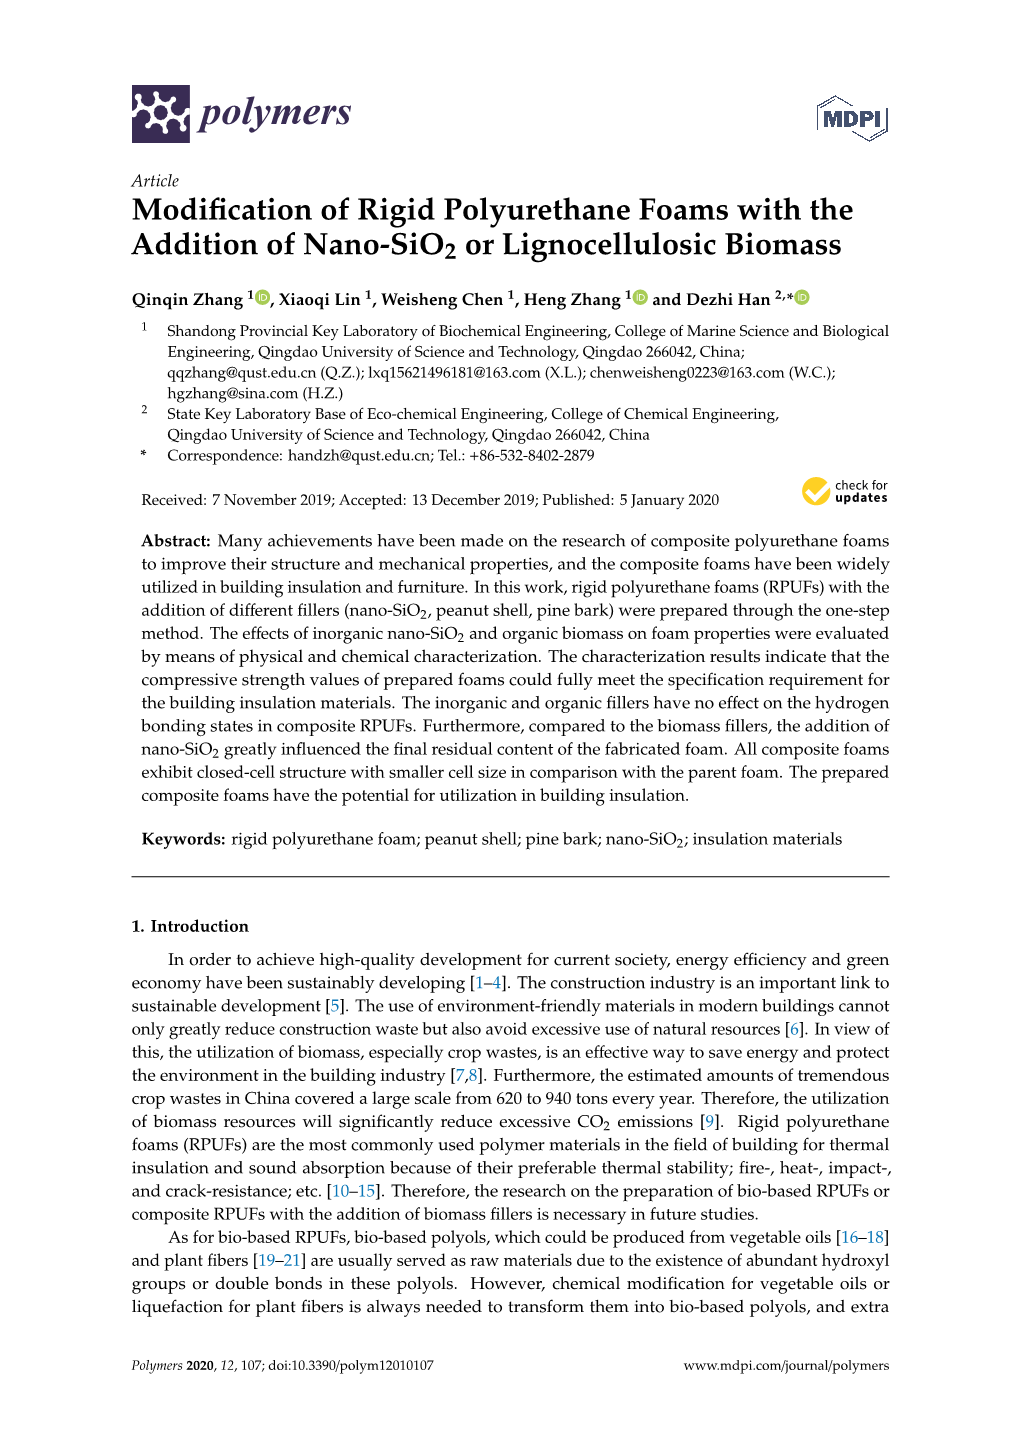 Modification of Rigid Polyurethane Foams with the Addition of Nano-Sio2 Or Lignocellulosic Biomass